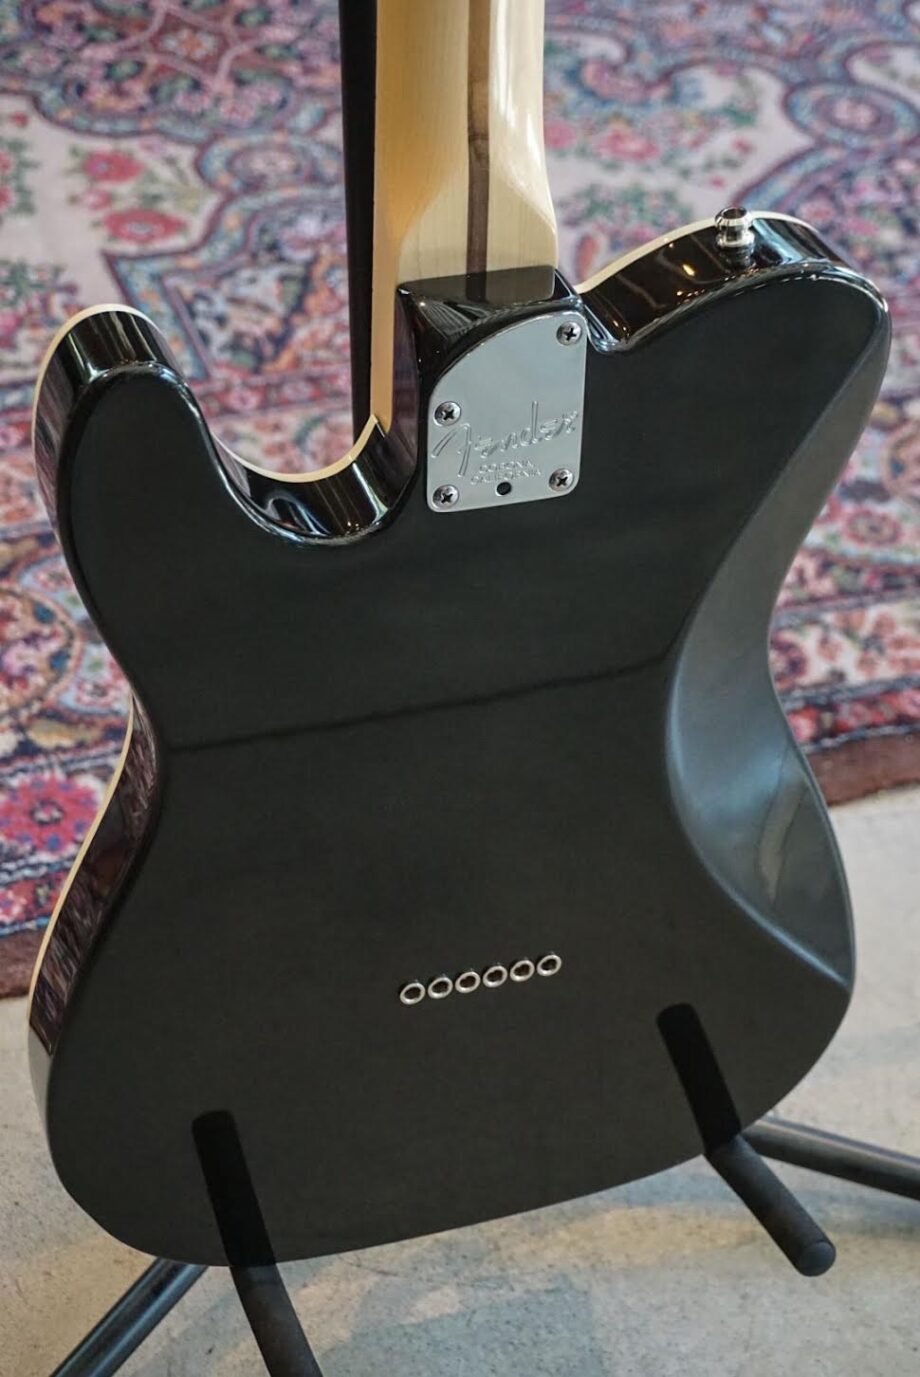 2007 Fender American Deluxe Telecaster